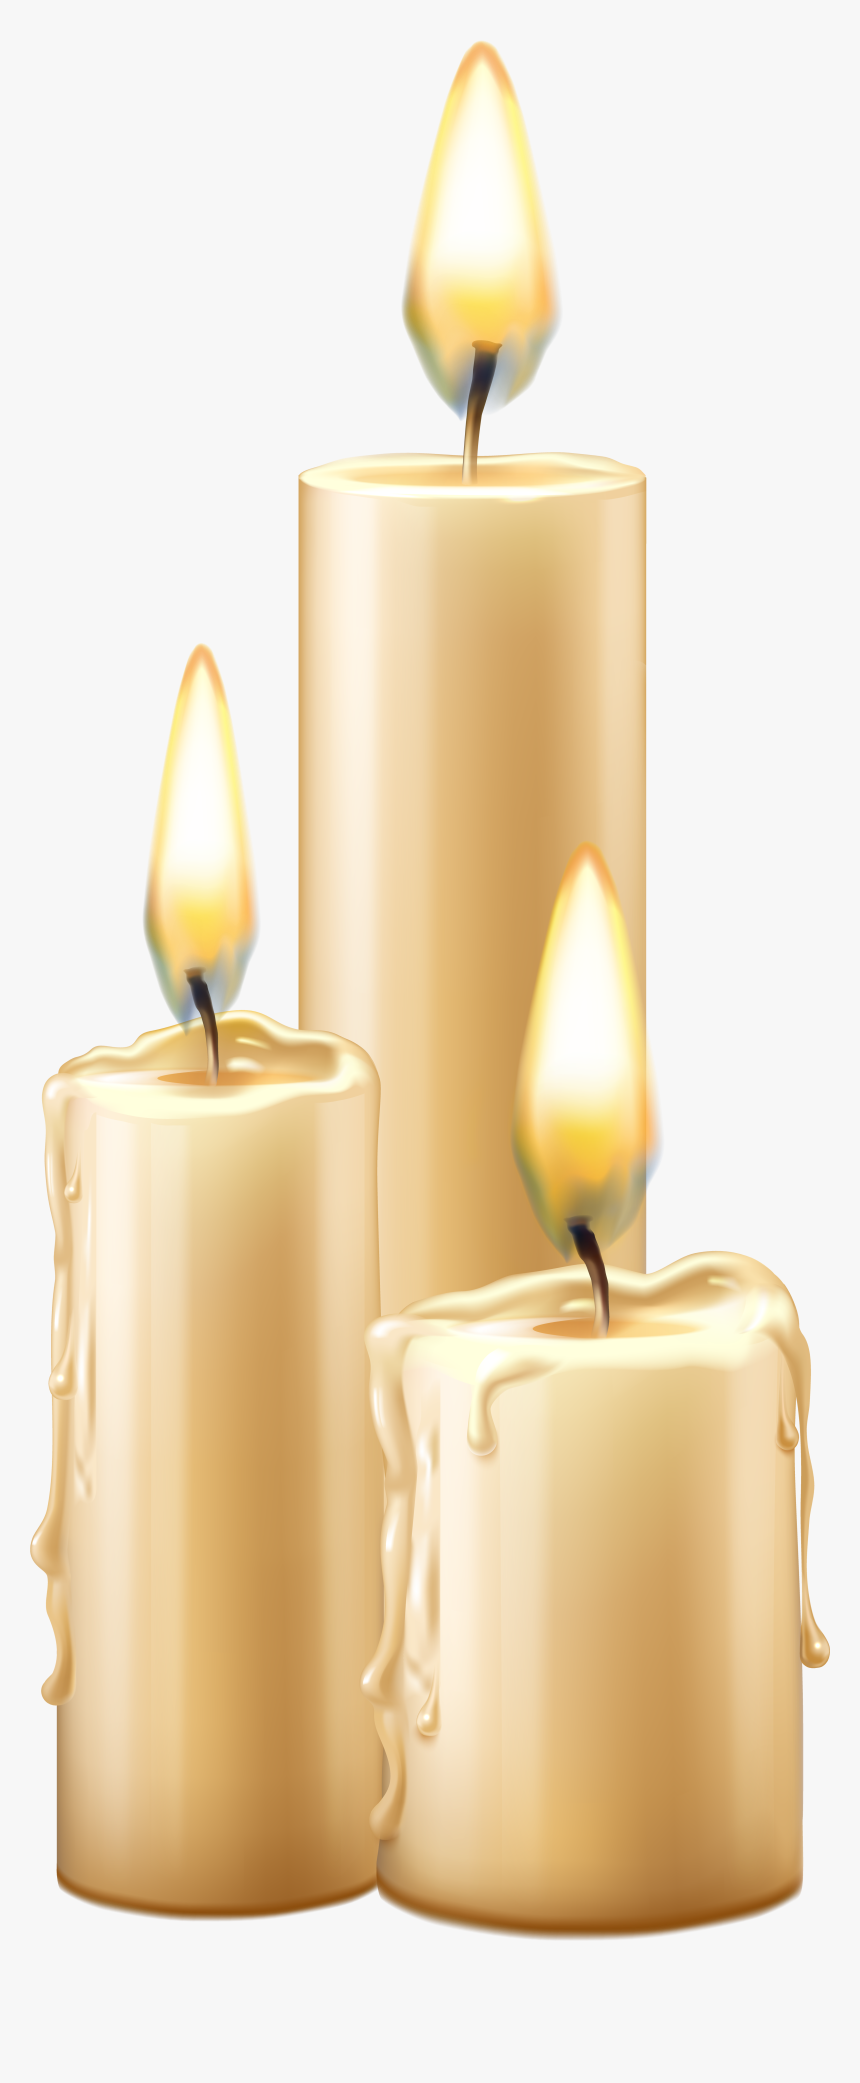 Candles Transparent Image Galler